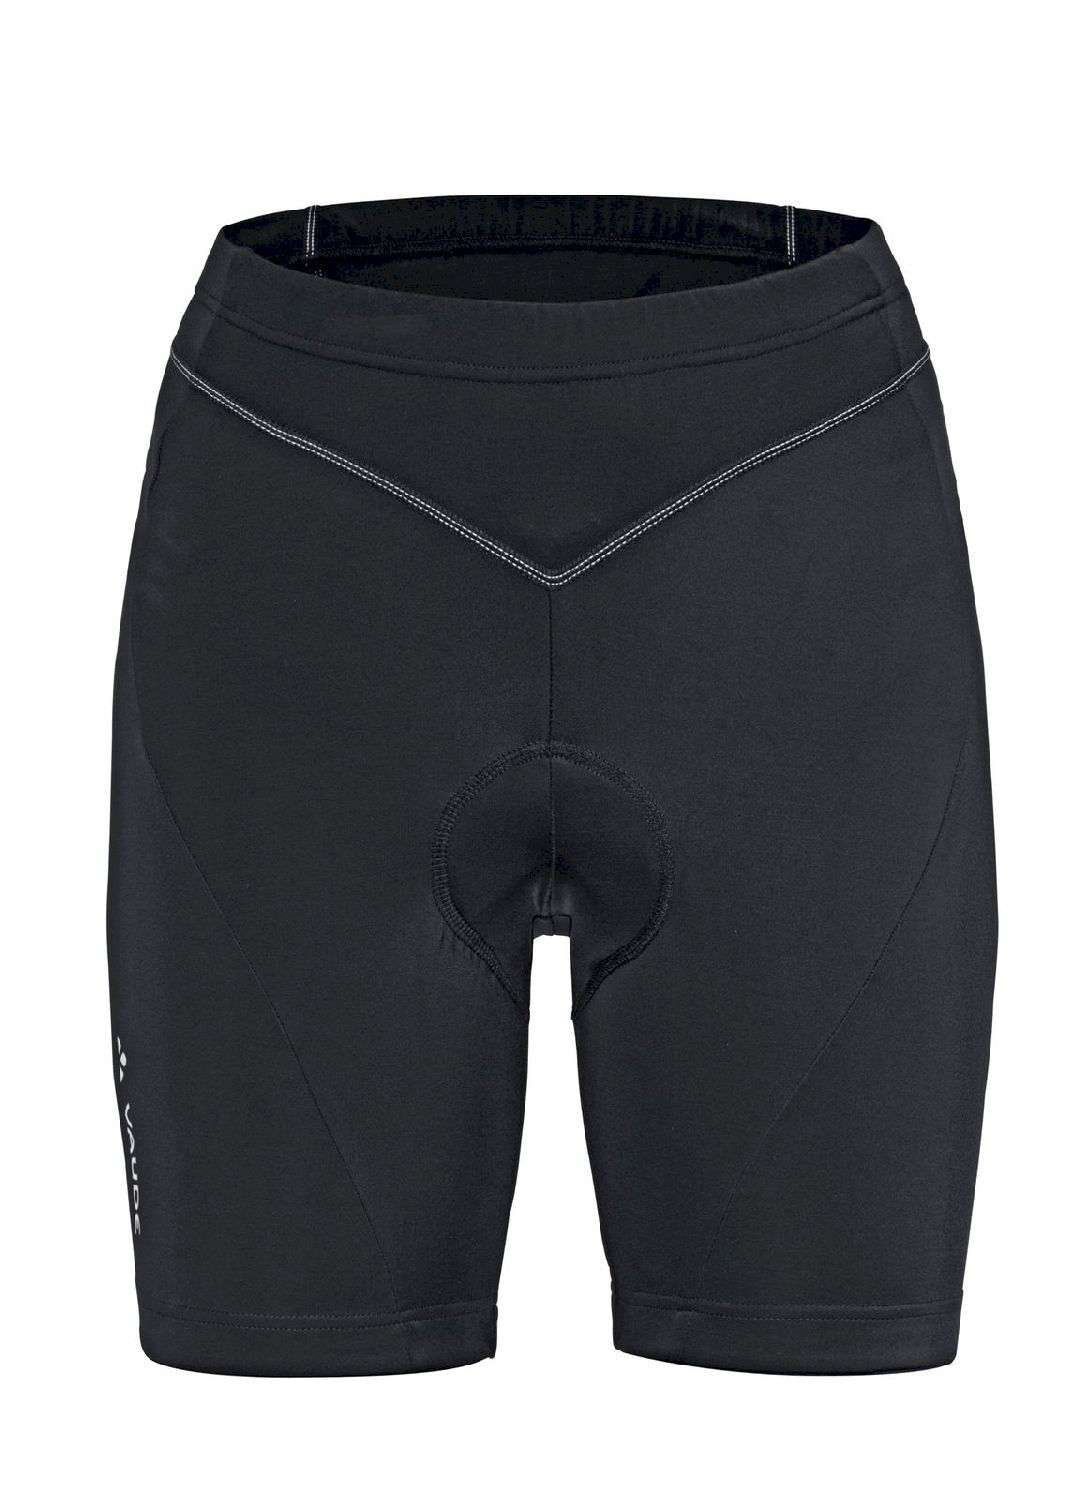 Vaude Active Pants - Cycling trousers - Women's